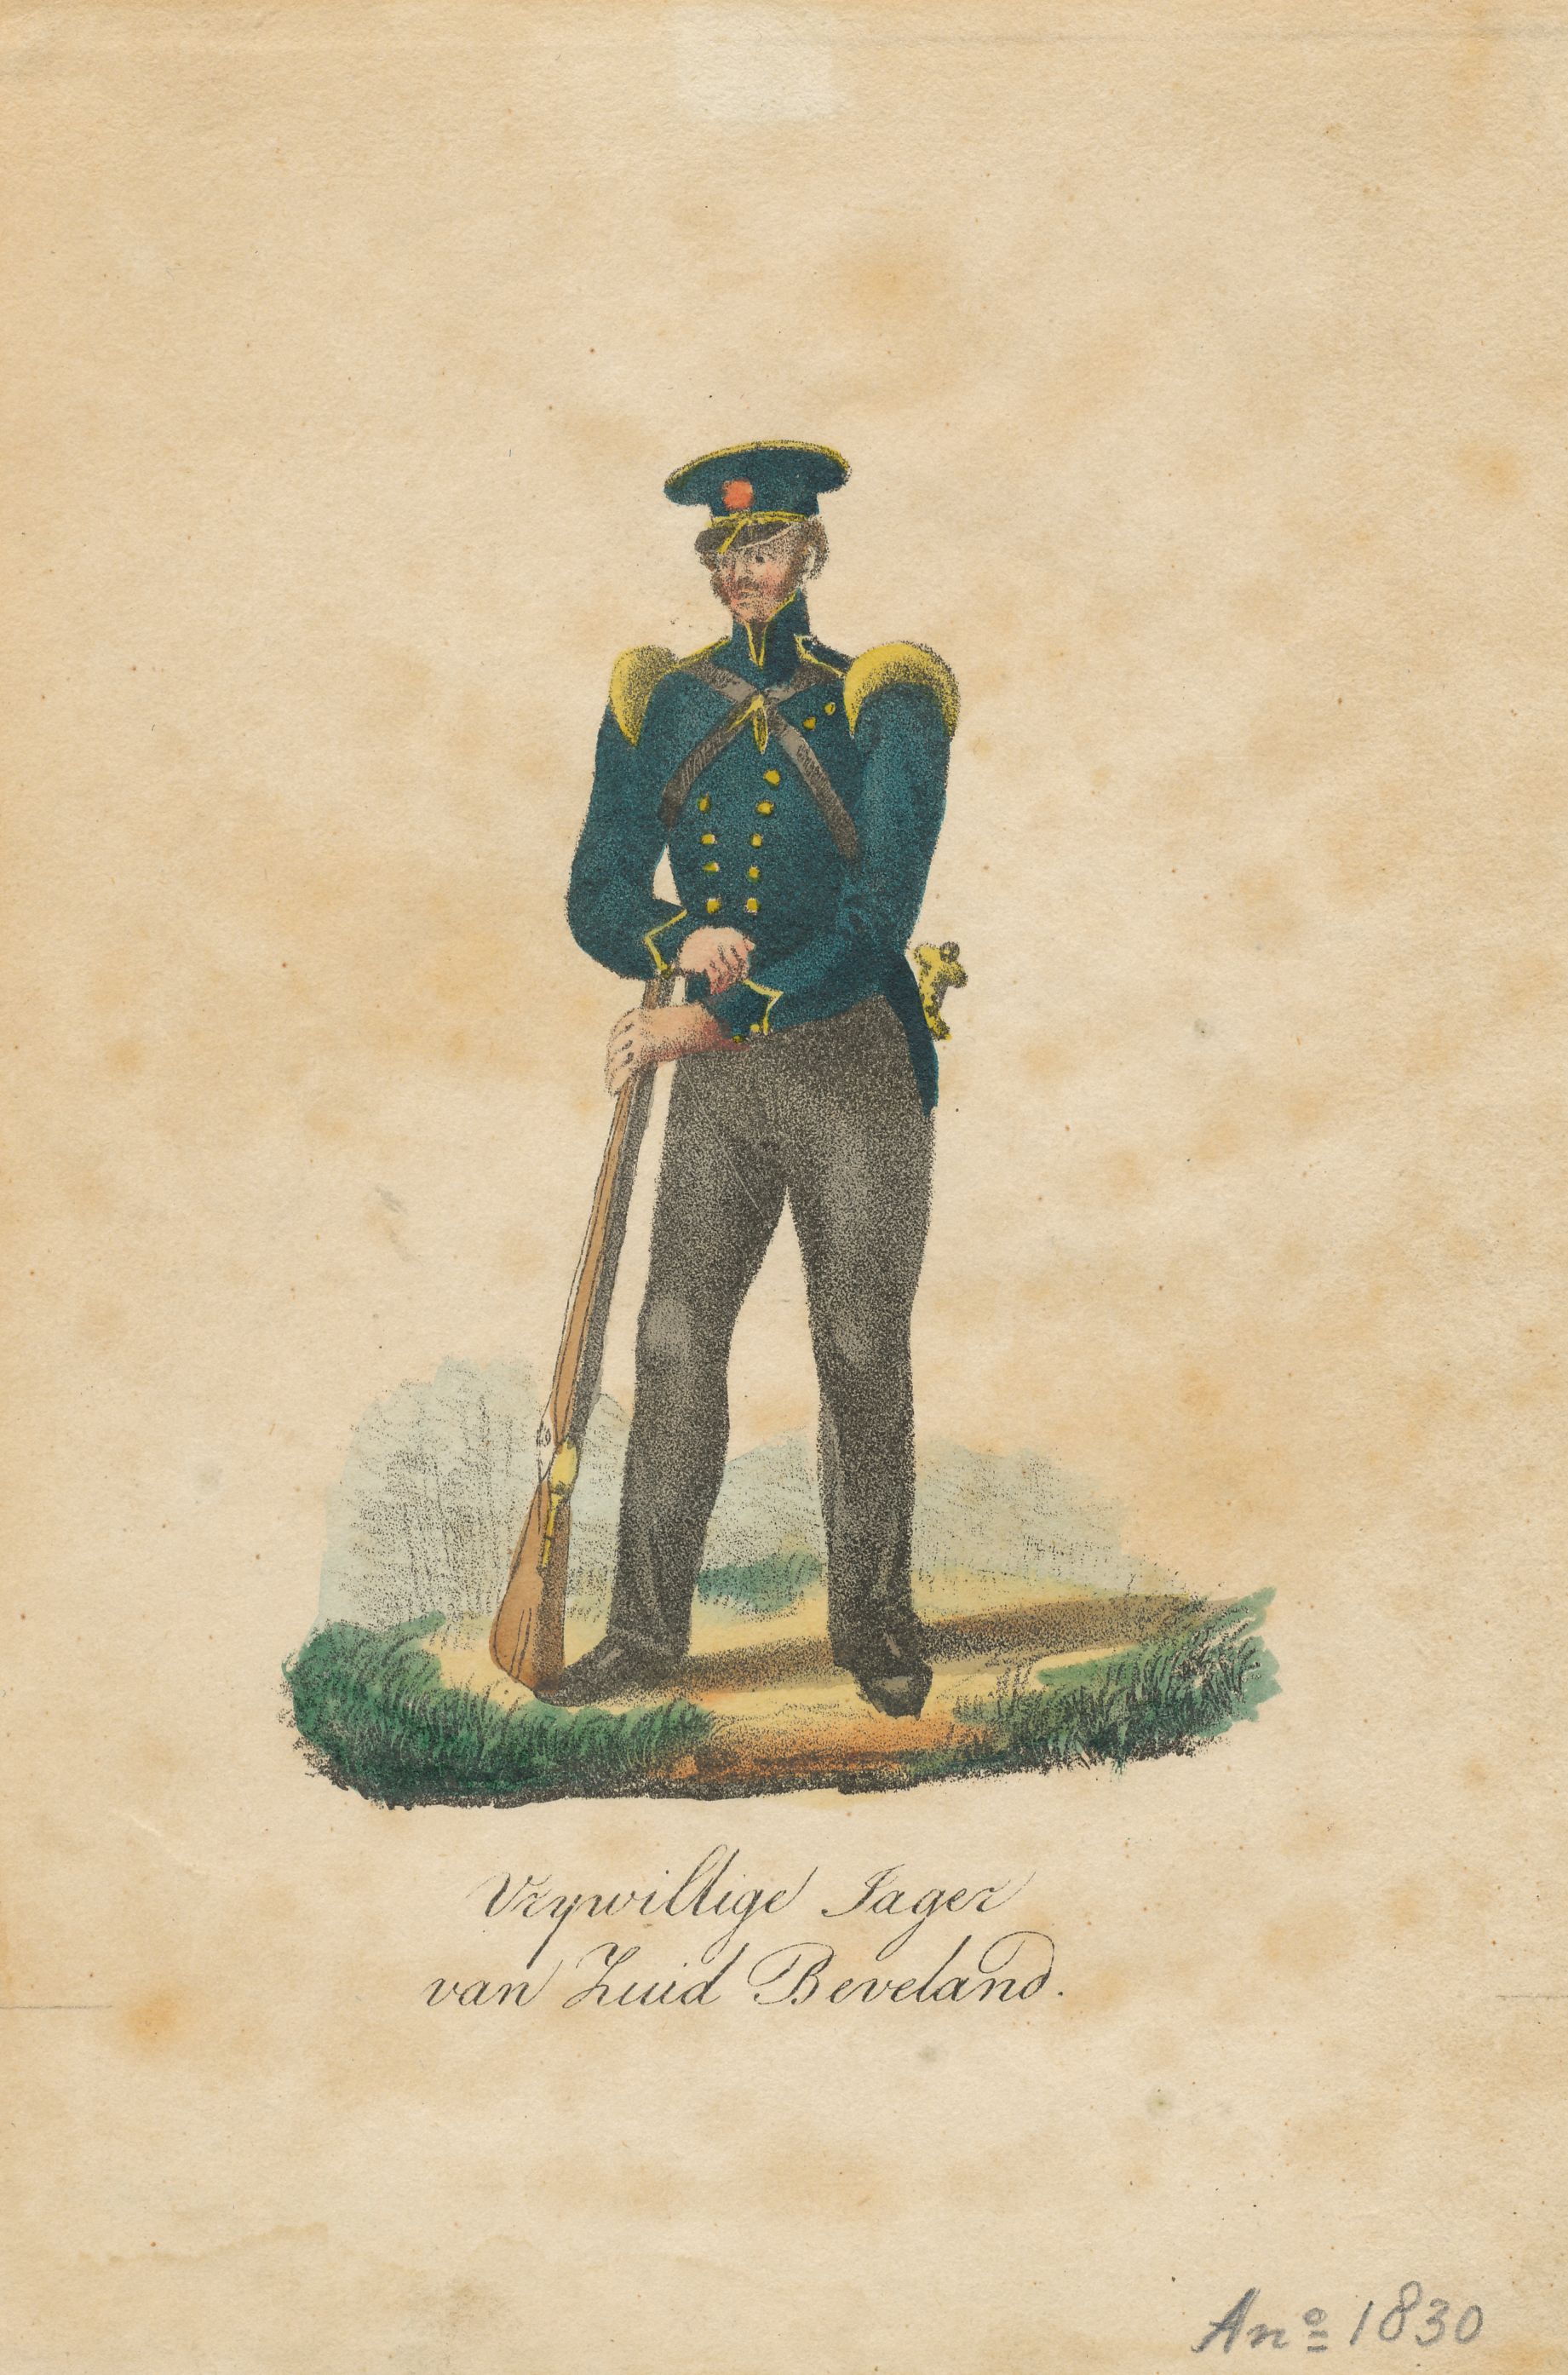 Vrijwillige jager van Zuid-Beveland, 1830. HMDB.